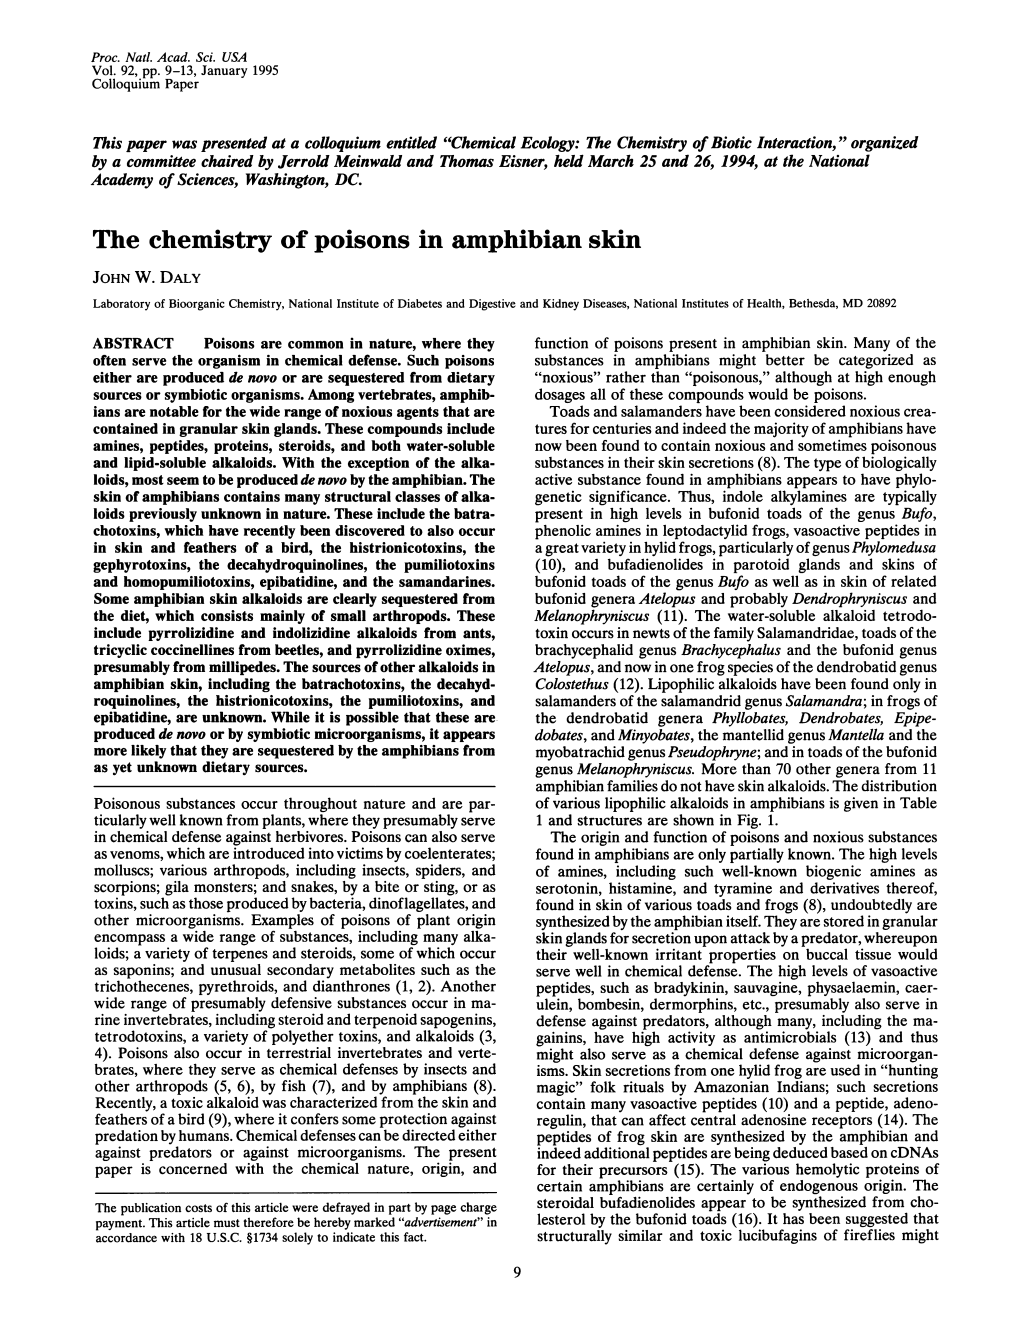 The Chemistry of Poisons in Amphibian Skin JOHN W